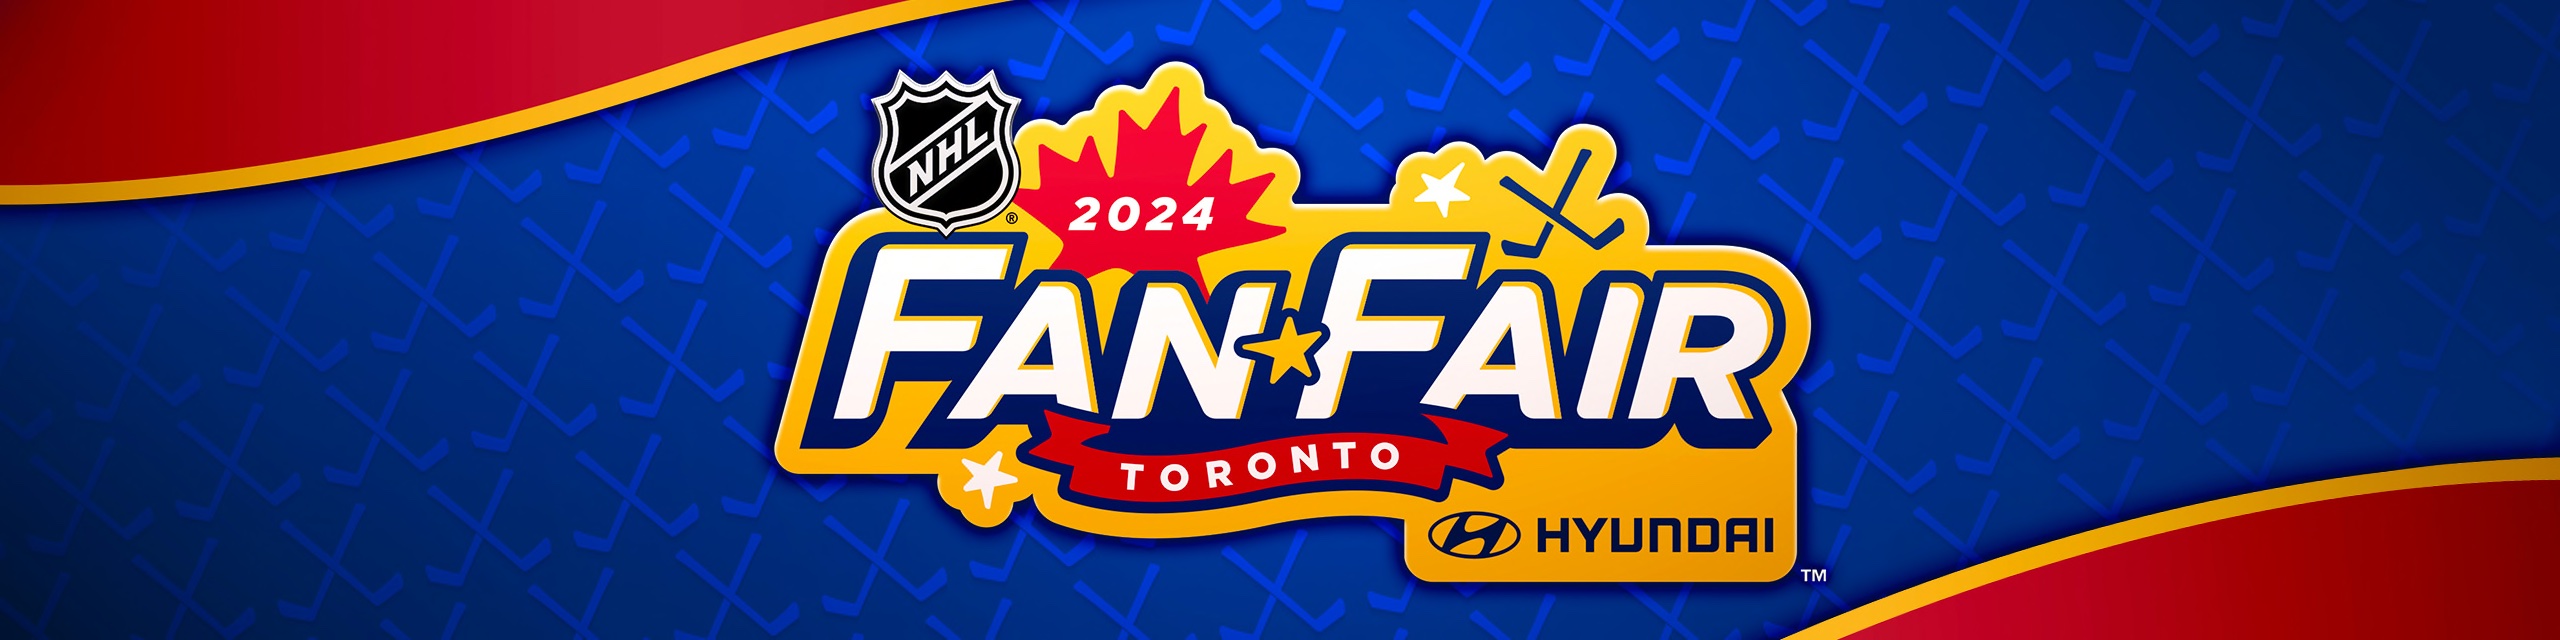 Poster for NHL All-Star Fan Fair.